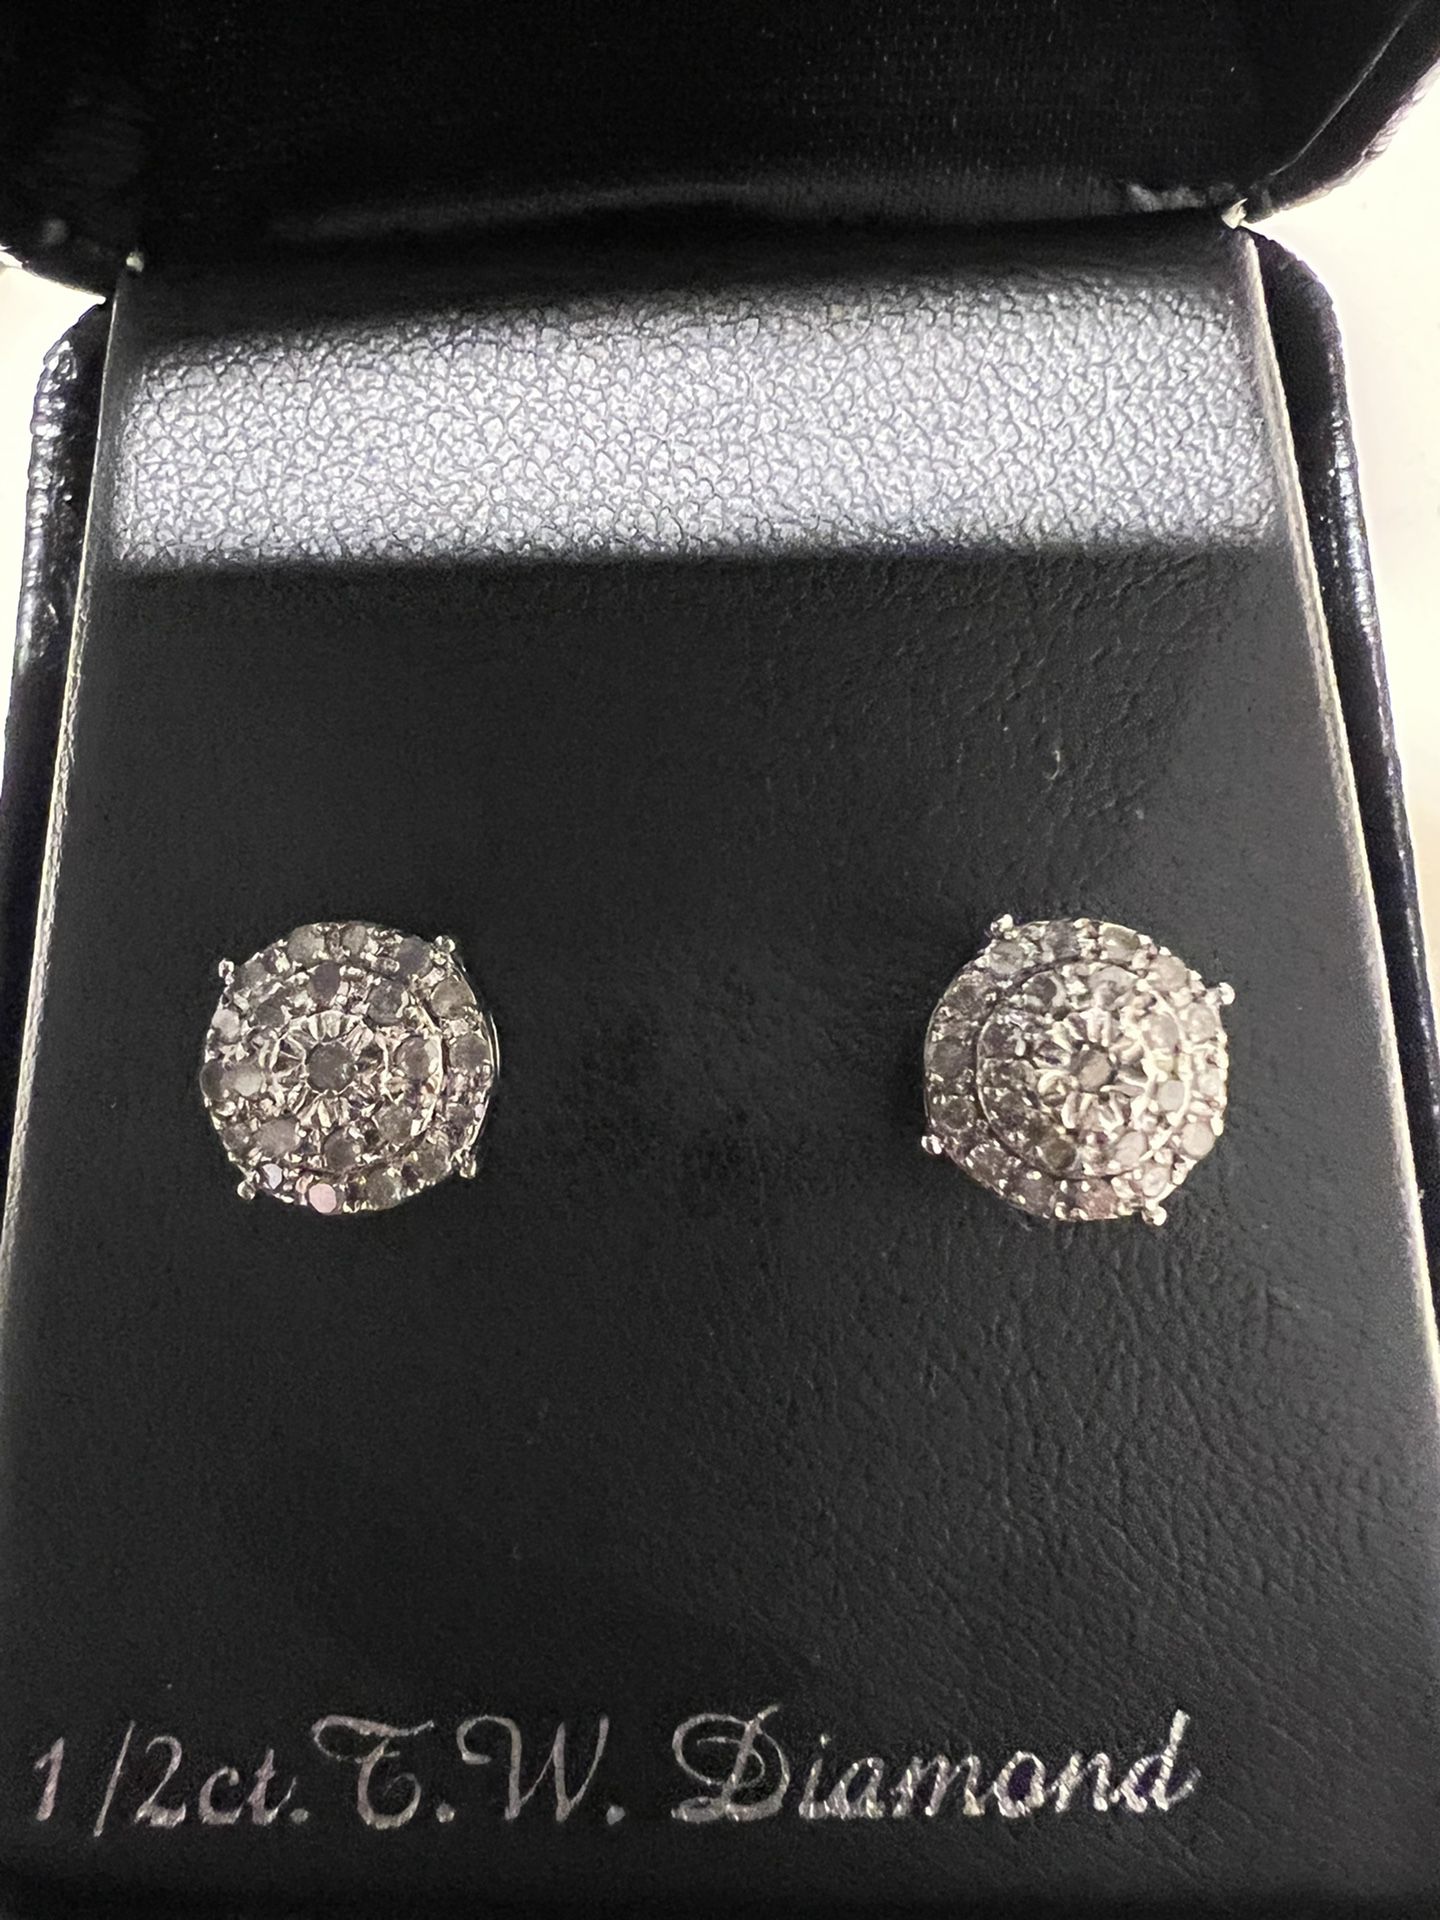 1/2 Carat diamond earrings